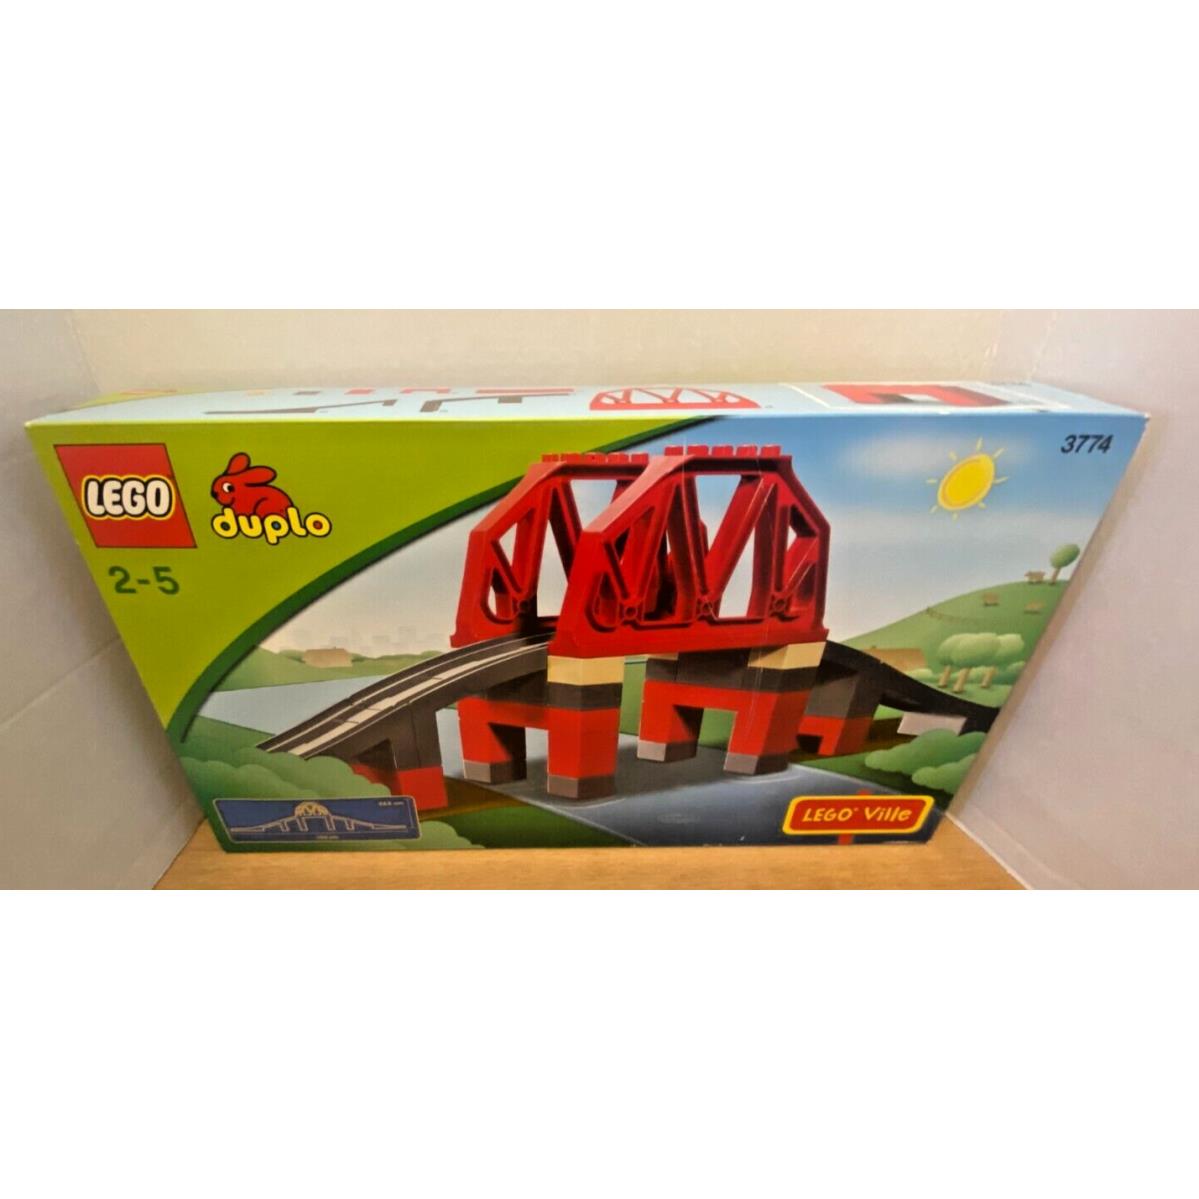 Lego Duplo 3774 Train Bridge Track Set Lego Ville Mint Box